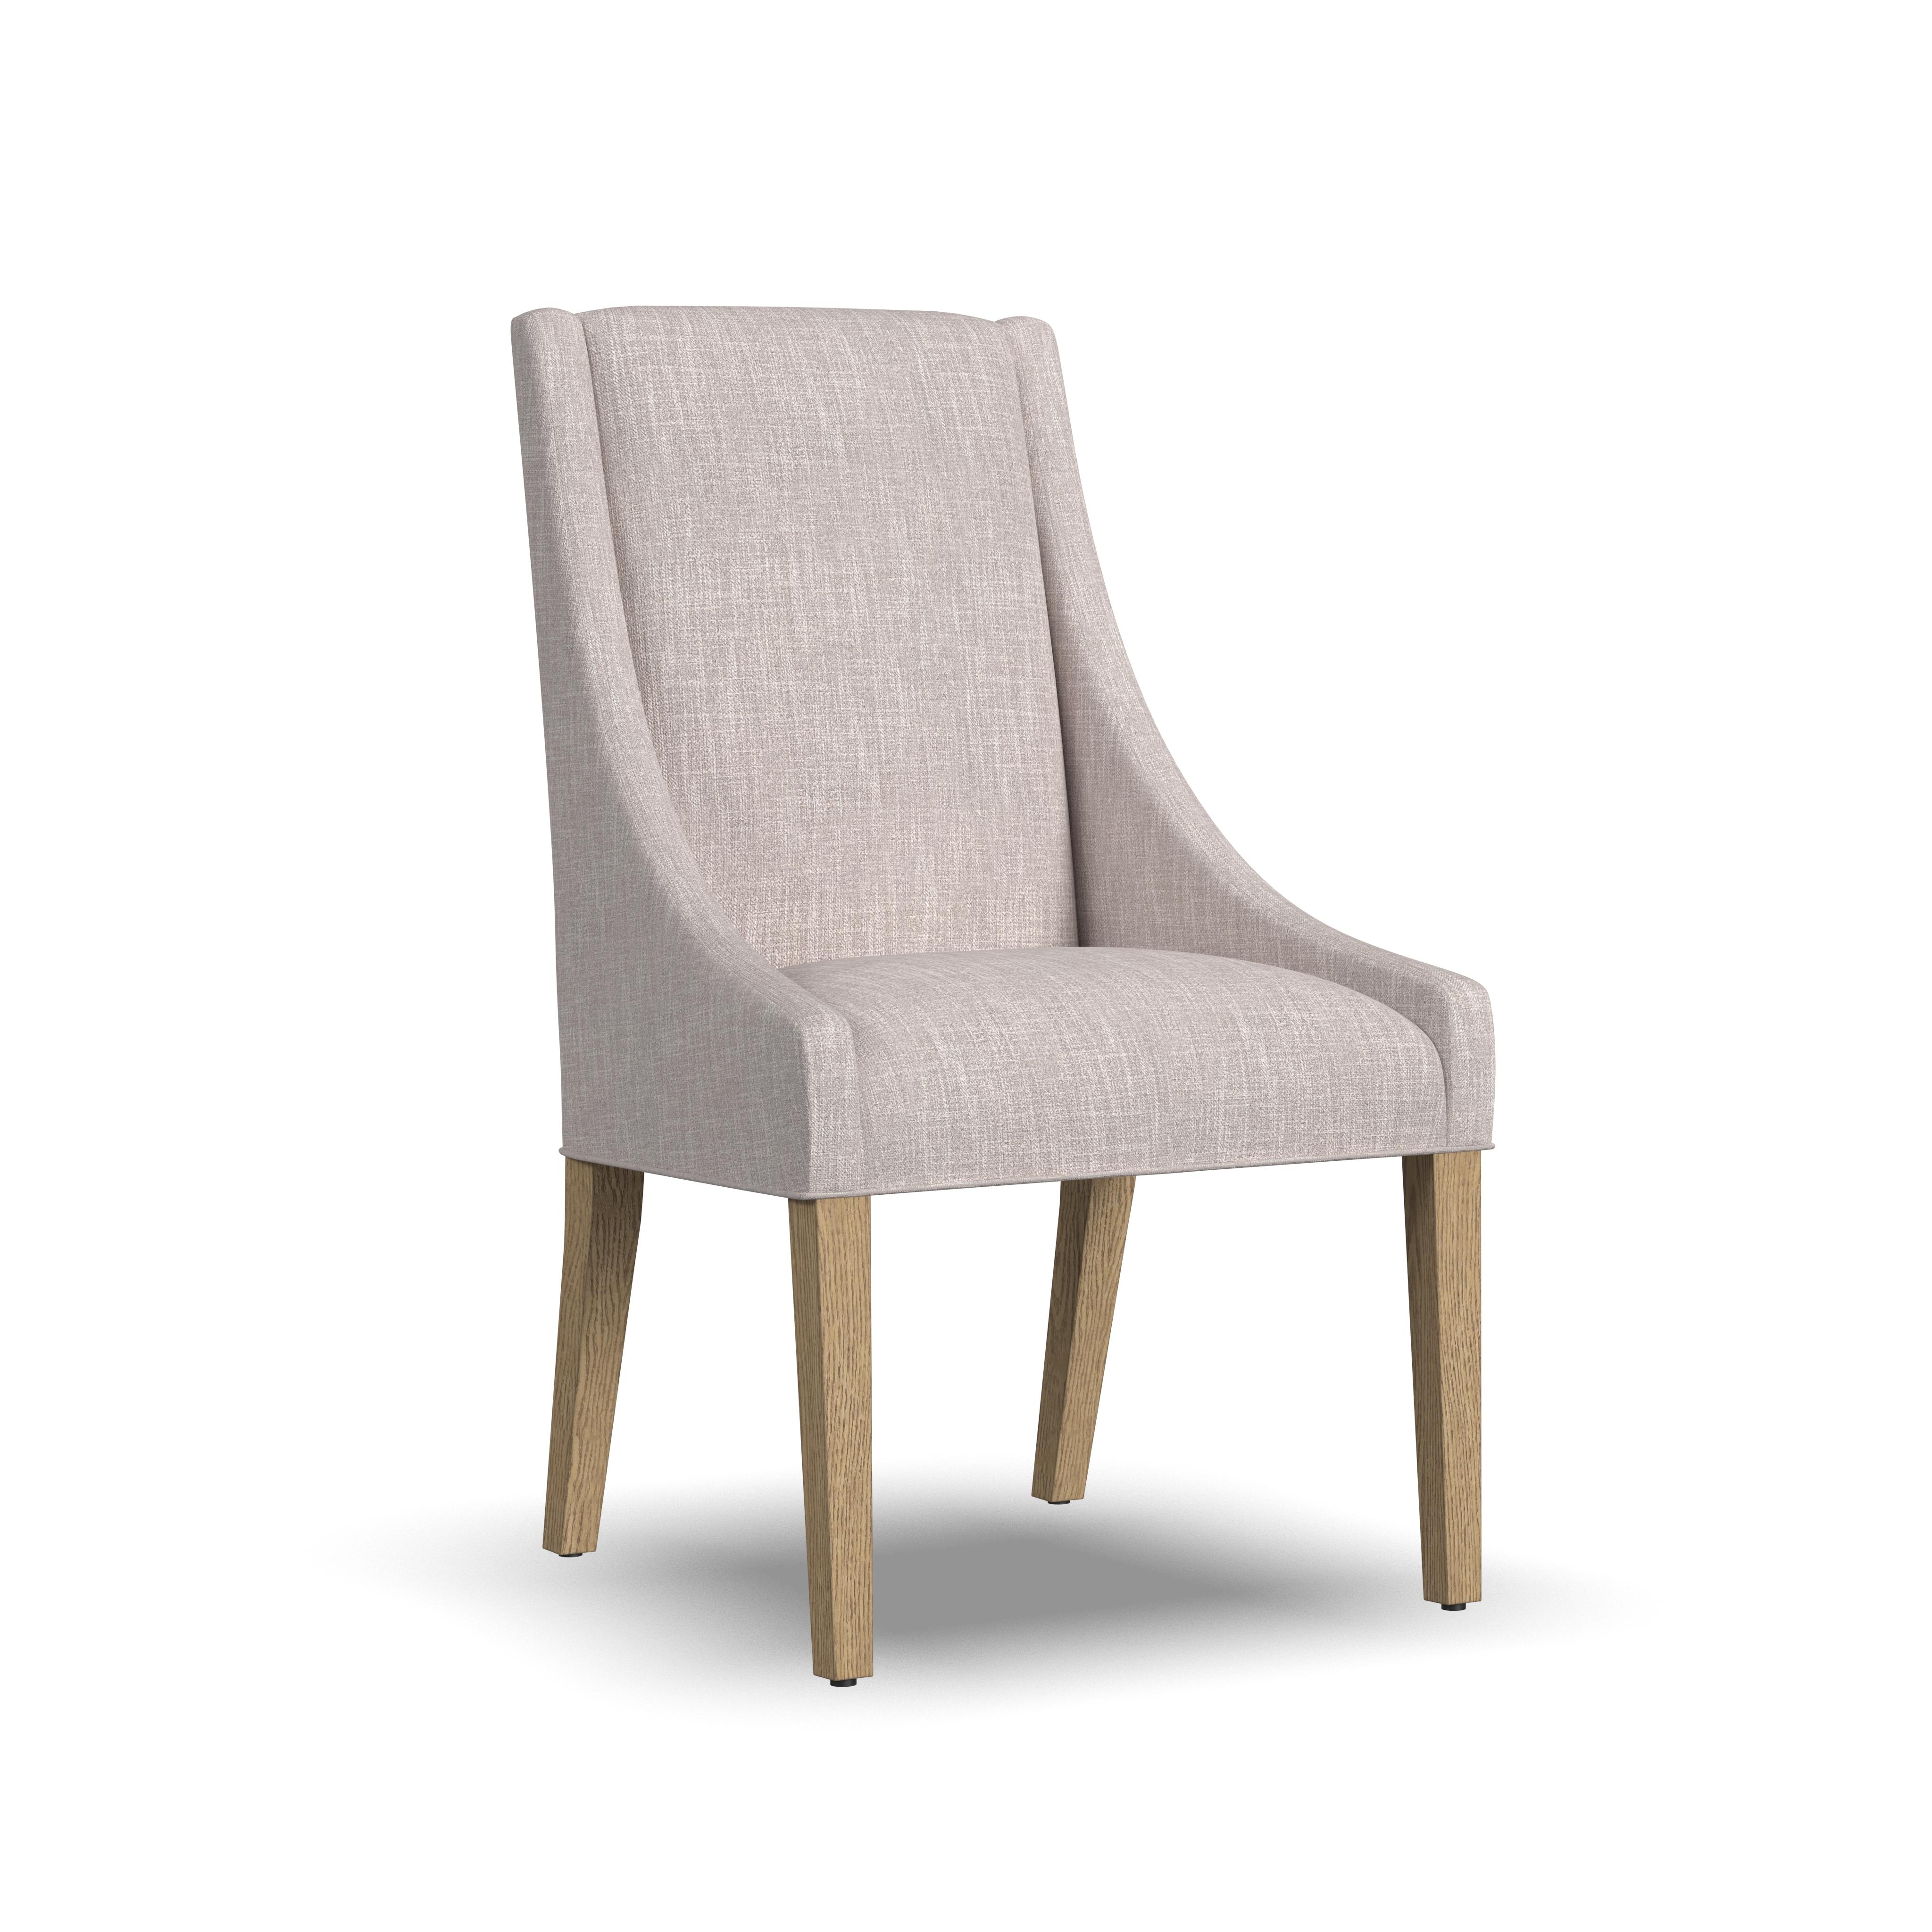 Flexsteel Lattice Upholstered Dining Chair